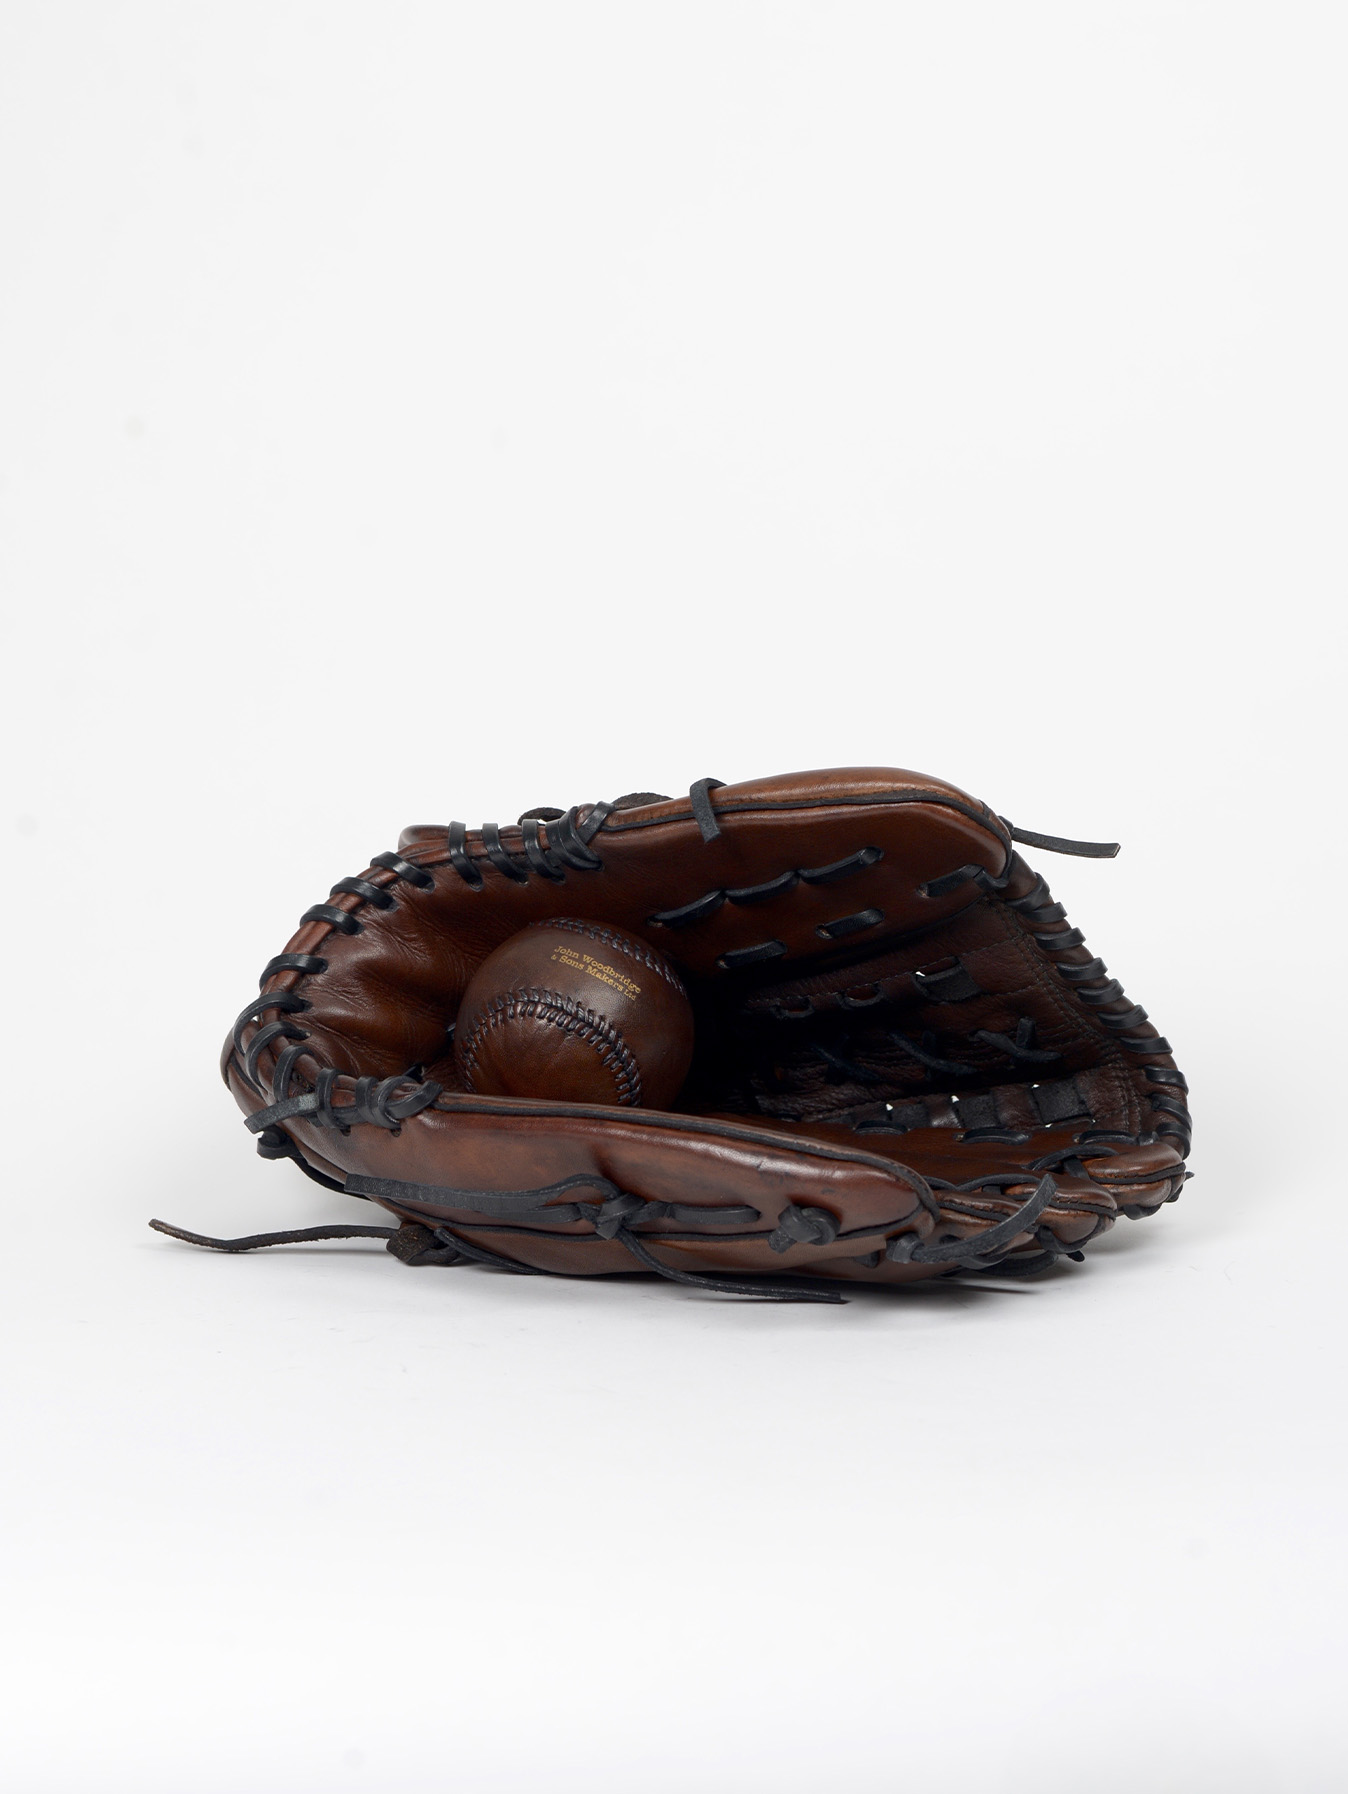 leather baseball glove noblestore